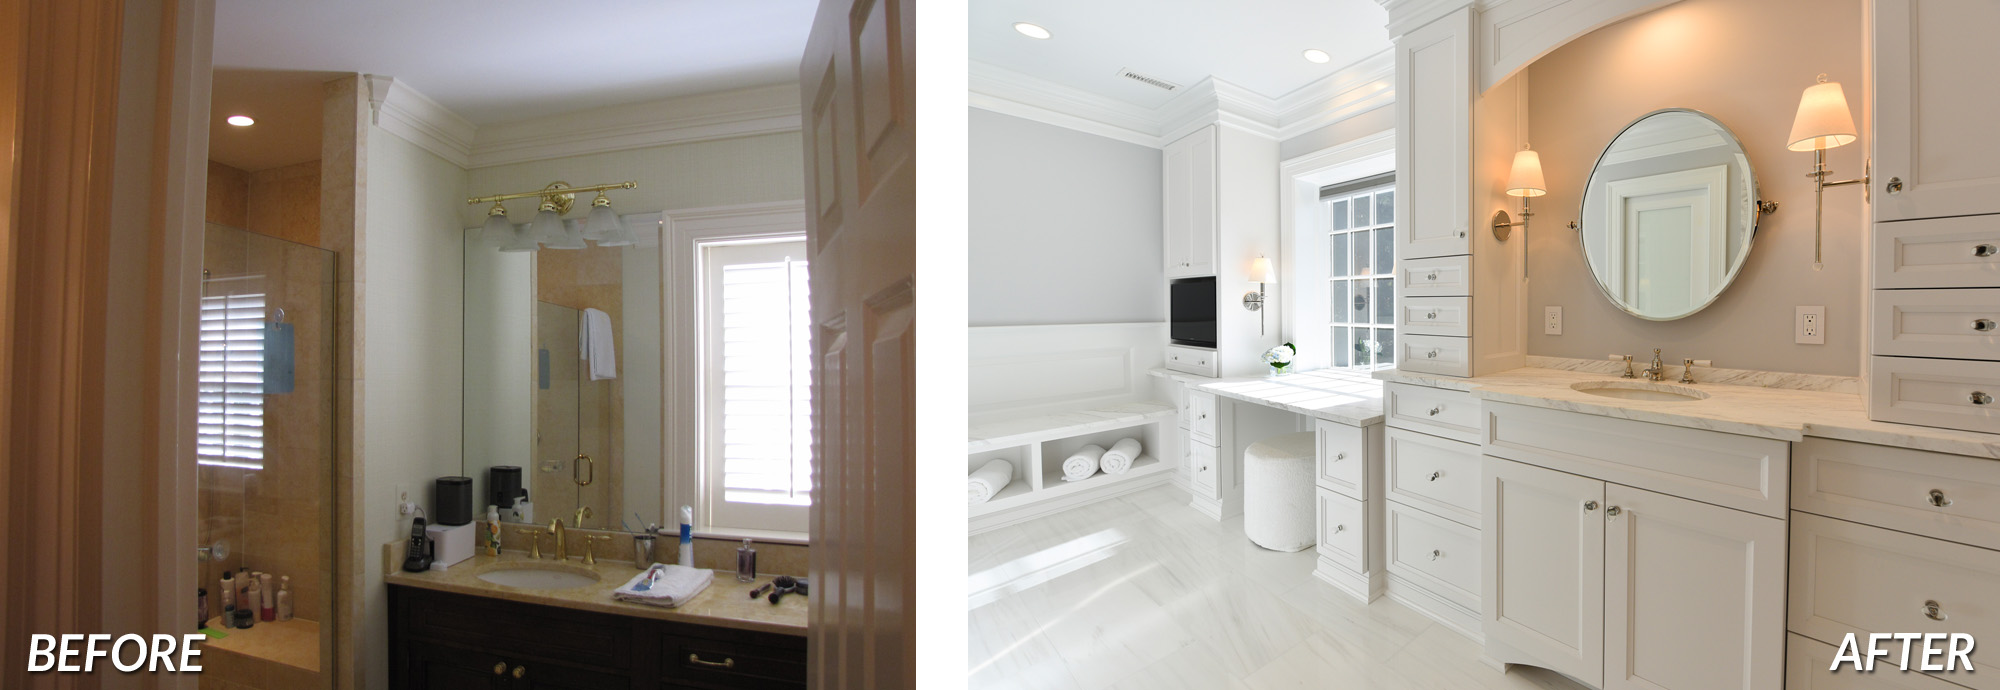 BOWA Design Design Build - McLean Master Bath Renovation Before & After